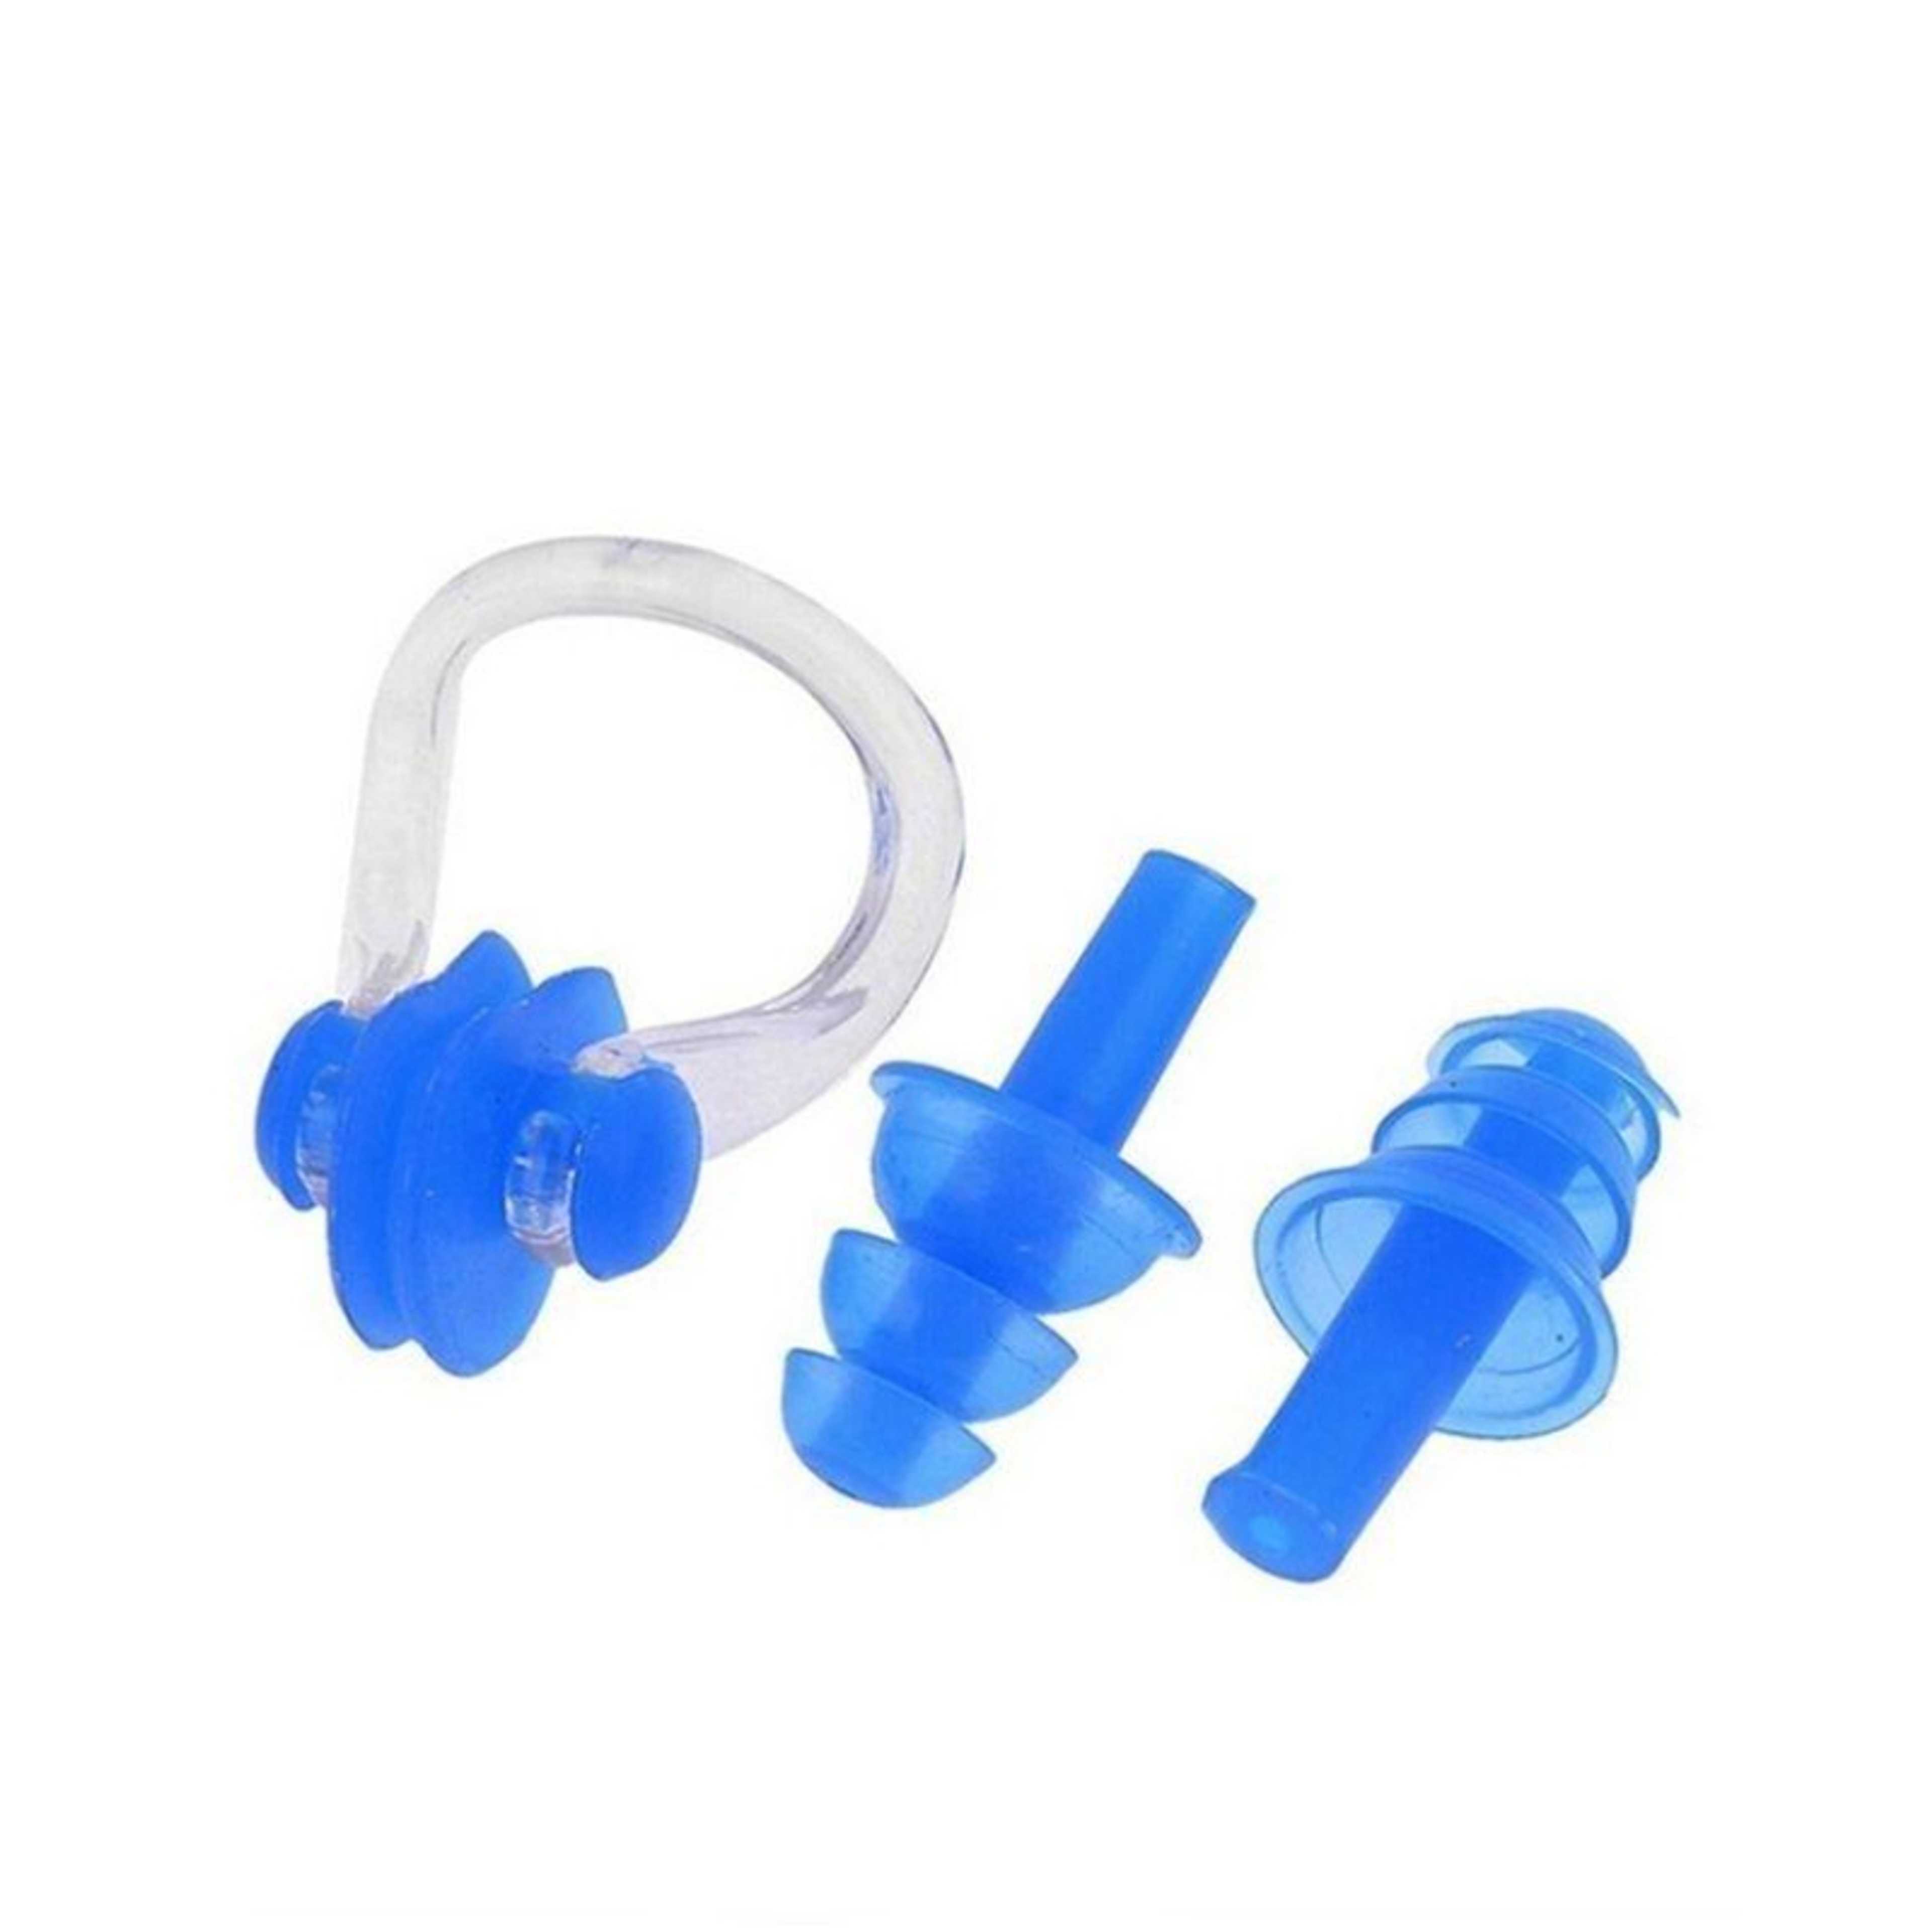 Swimming Silicone Nose Clip With Ear Plugs – MultiColor